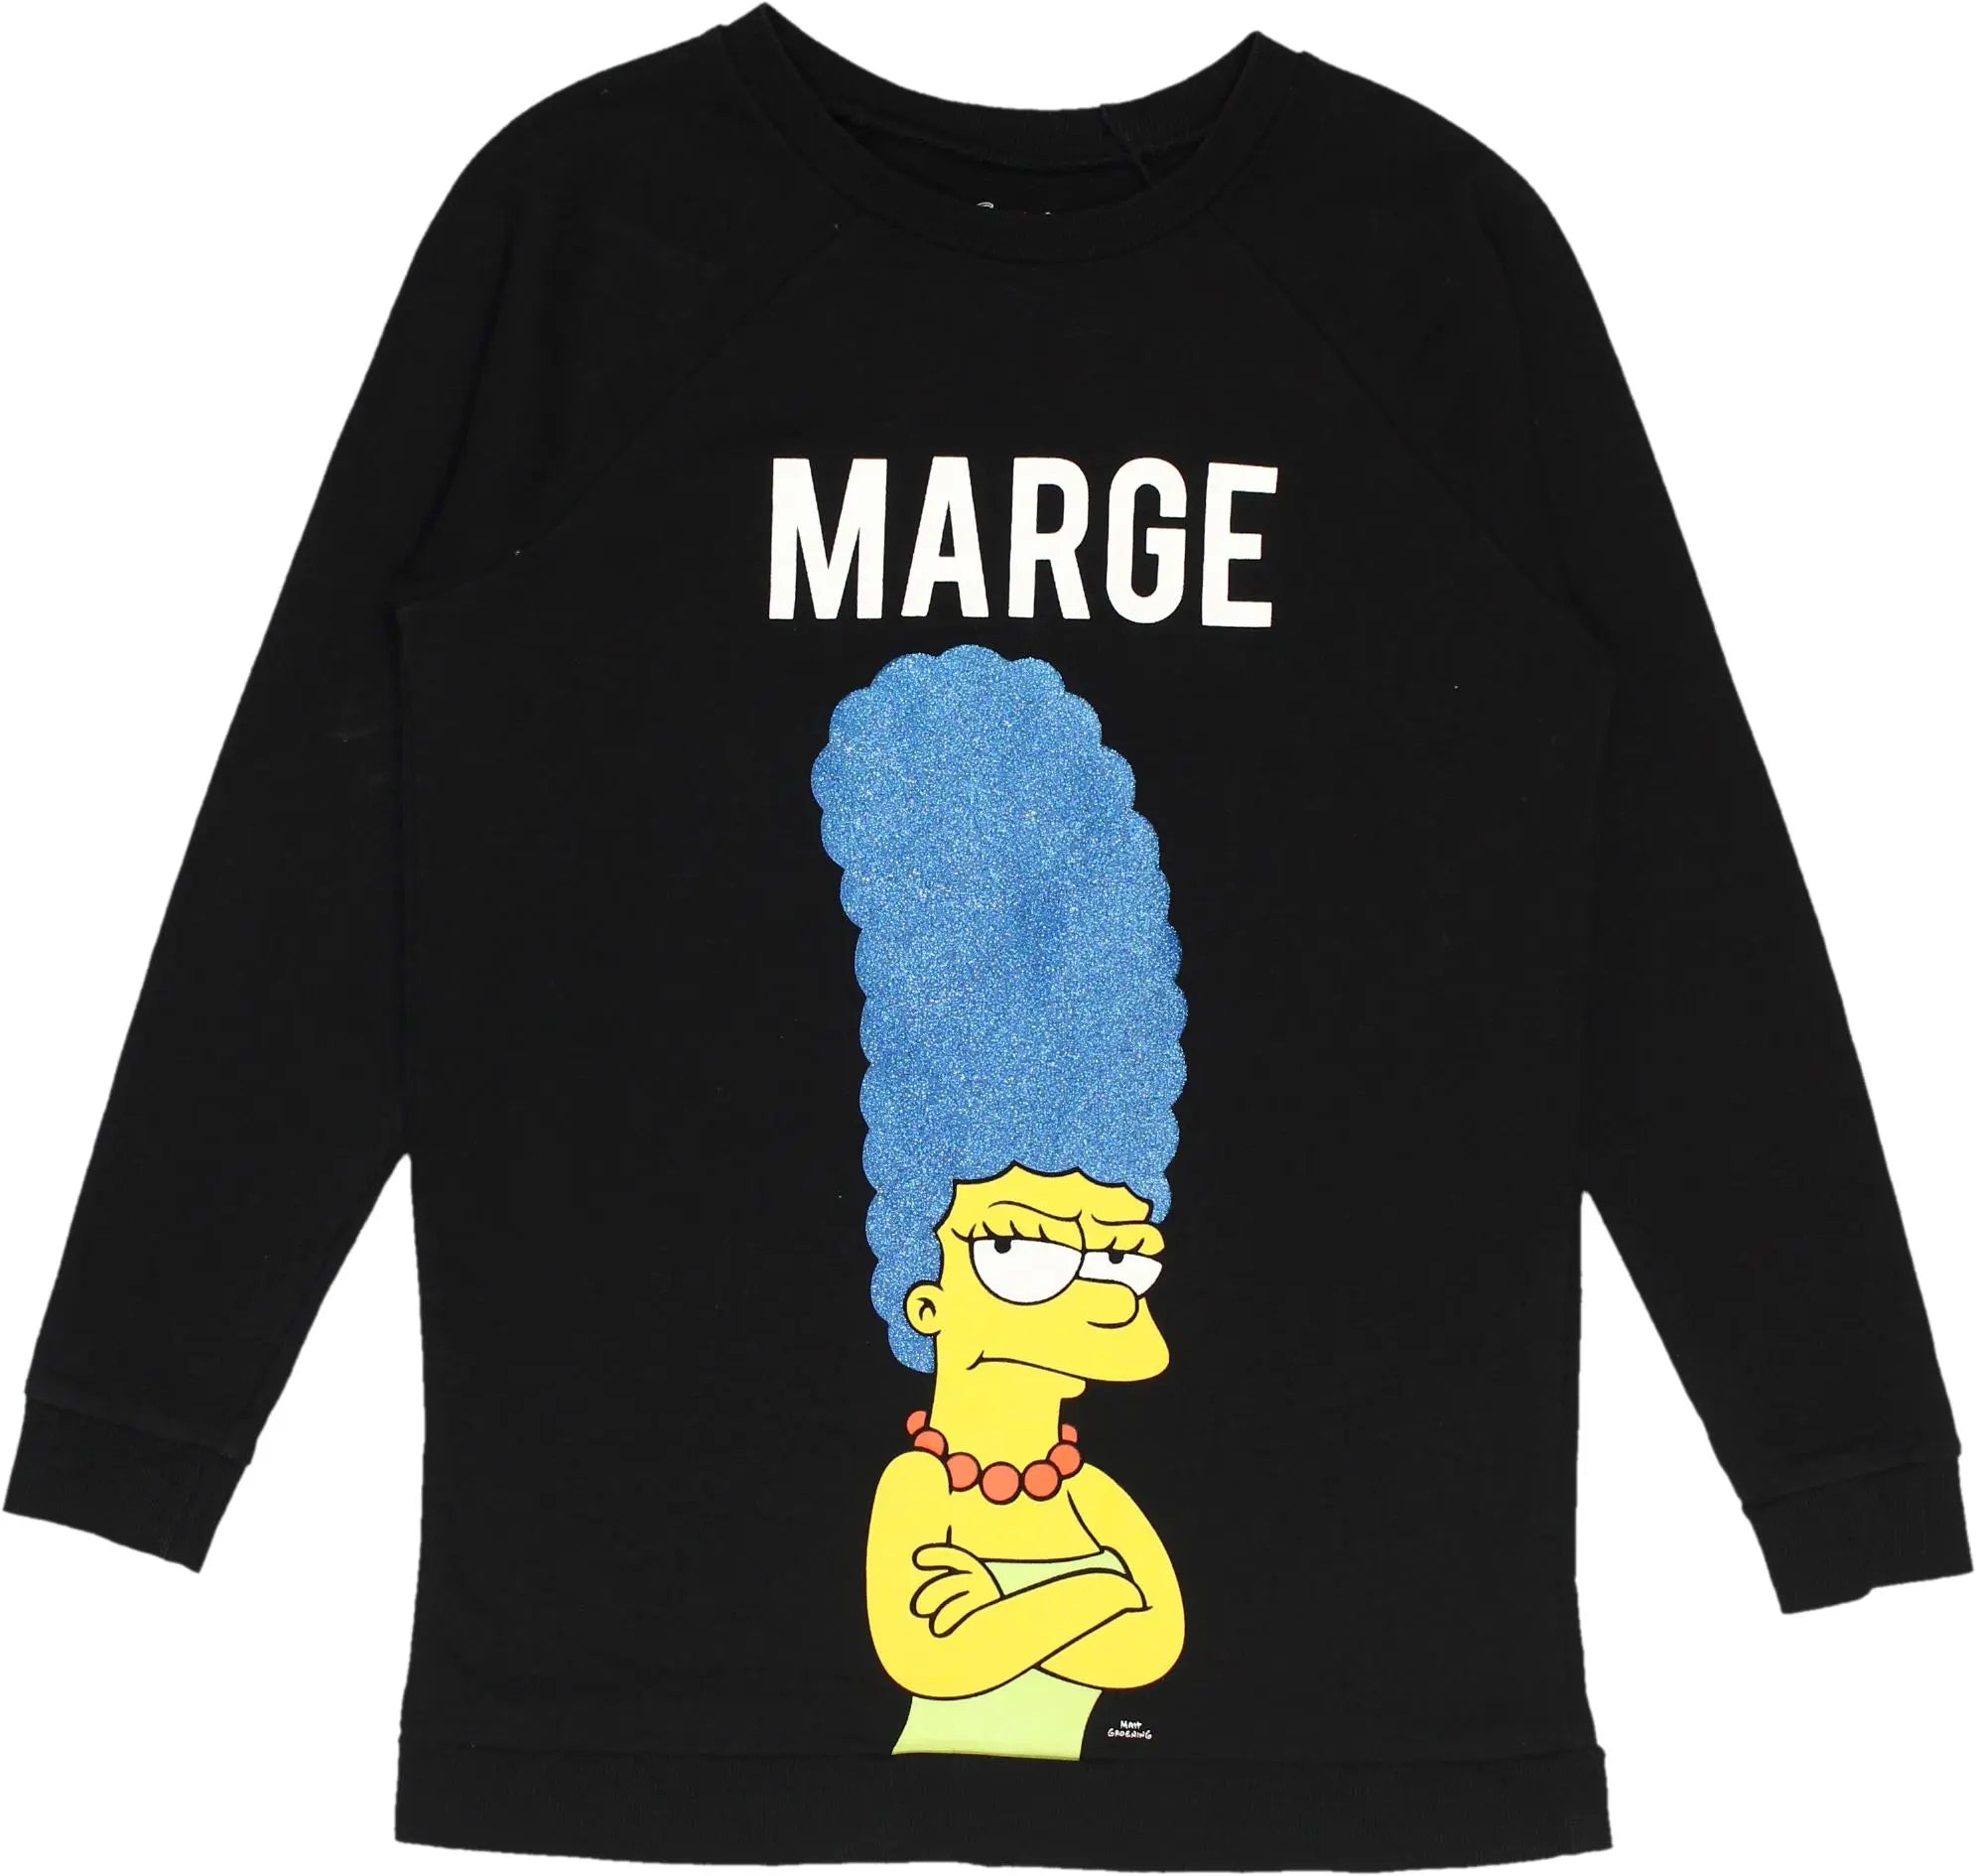 Tezenis - Black Simpsons Sweatshirt- ThriftTale.com - Vintage and second handclothing